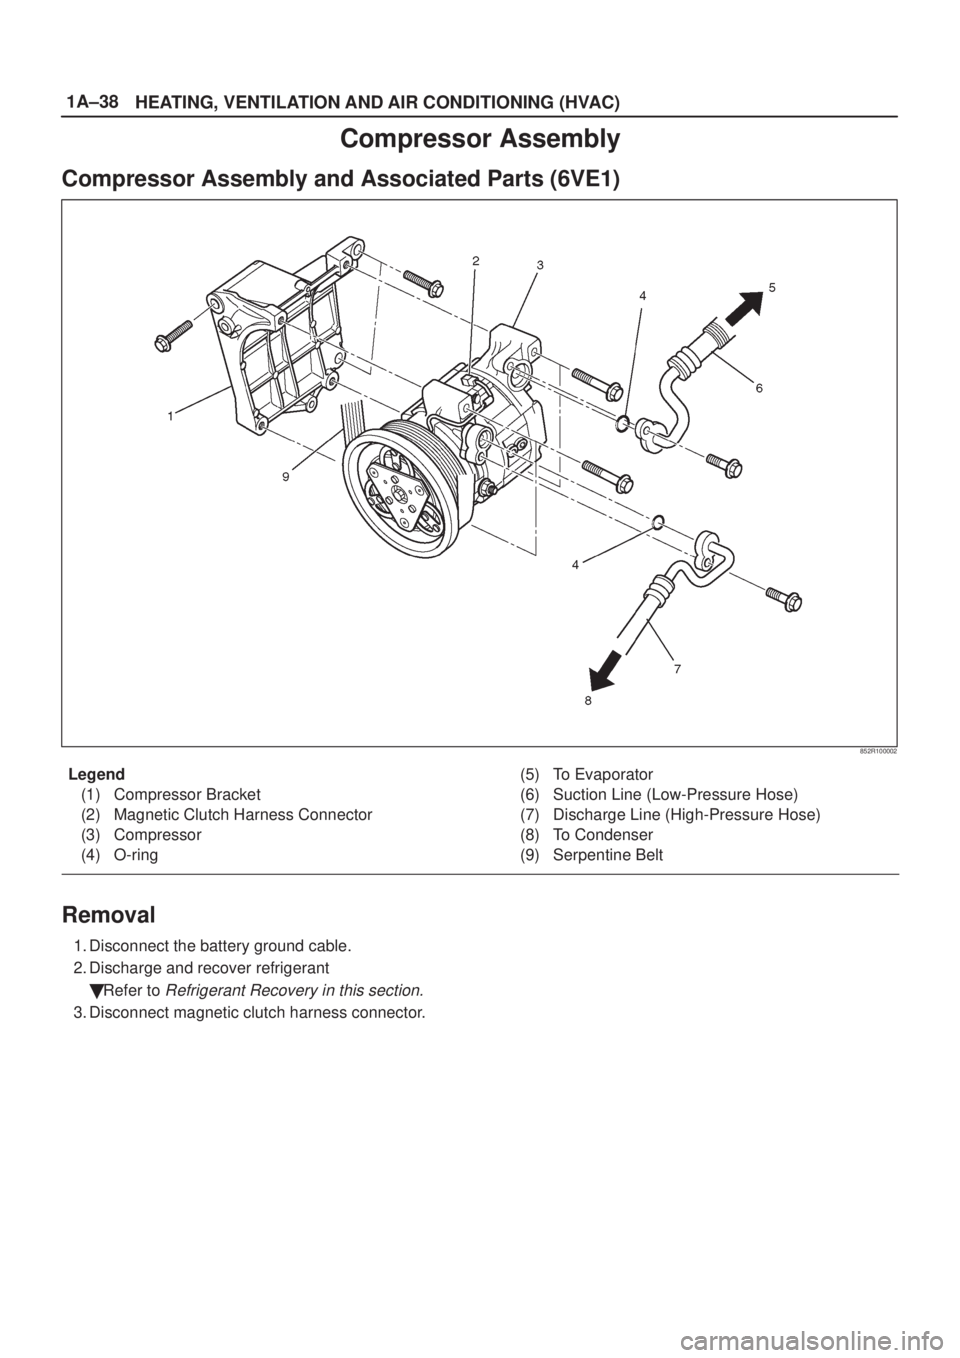 ISUZU AXIOM 2002  Service Manual PDF 1A±38
HEATING, VENTILATION AND AIR CONDITIONING (HVAC)
Compressor Assembly
Compressor Assembly and Associated Parts (6VE1)
852R100002
Legend
(1) Compressor Bracket
(2) Magnetic Clutch Harness Connect